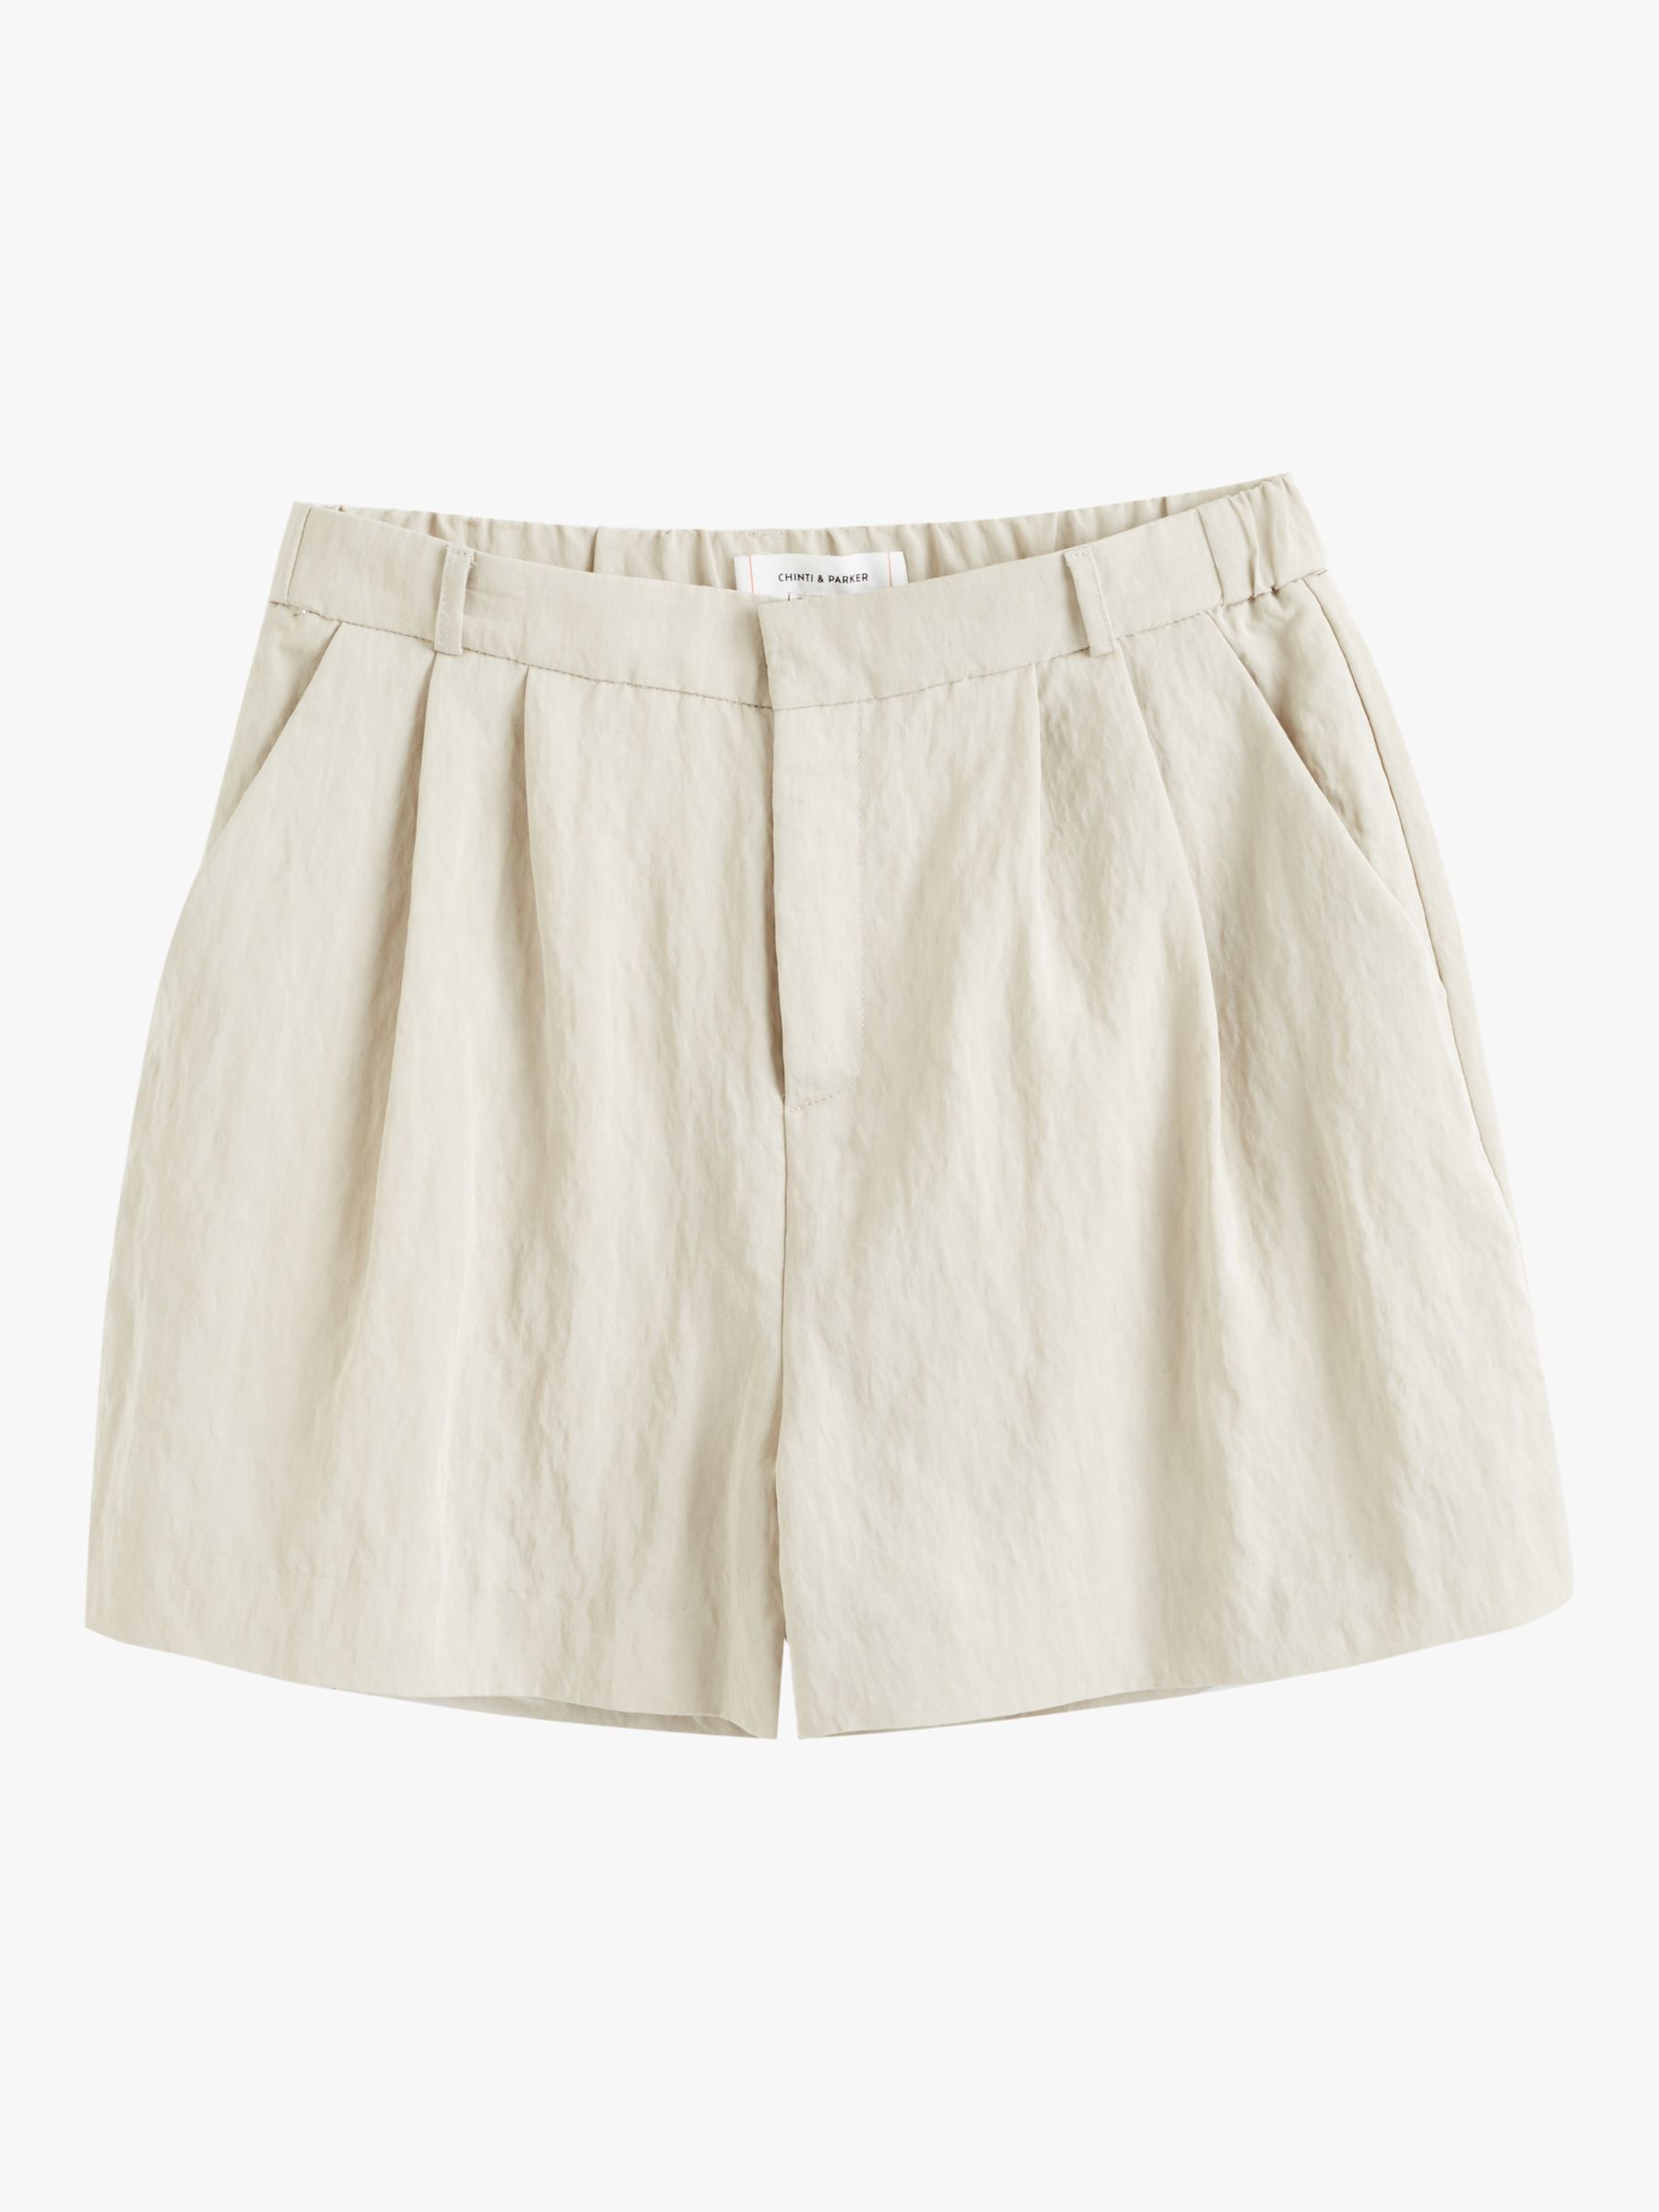 Chinti & Parker Lyocell Blend Shorts, Cream, 10